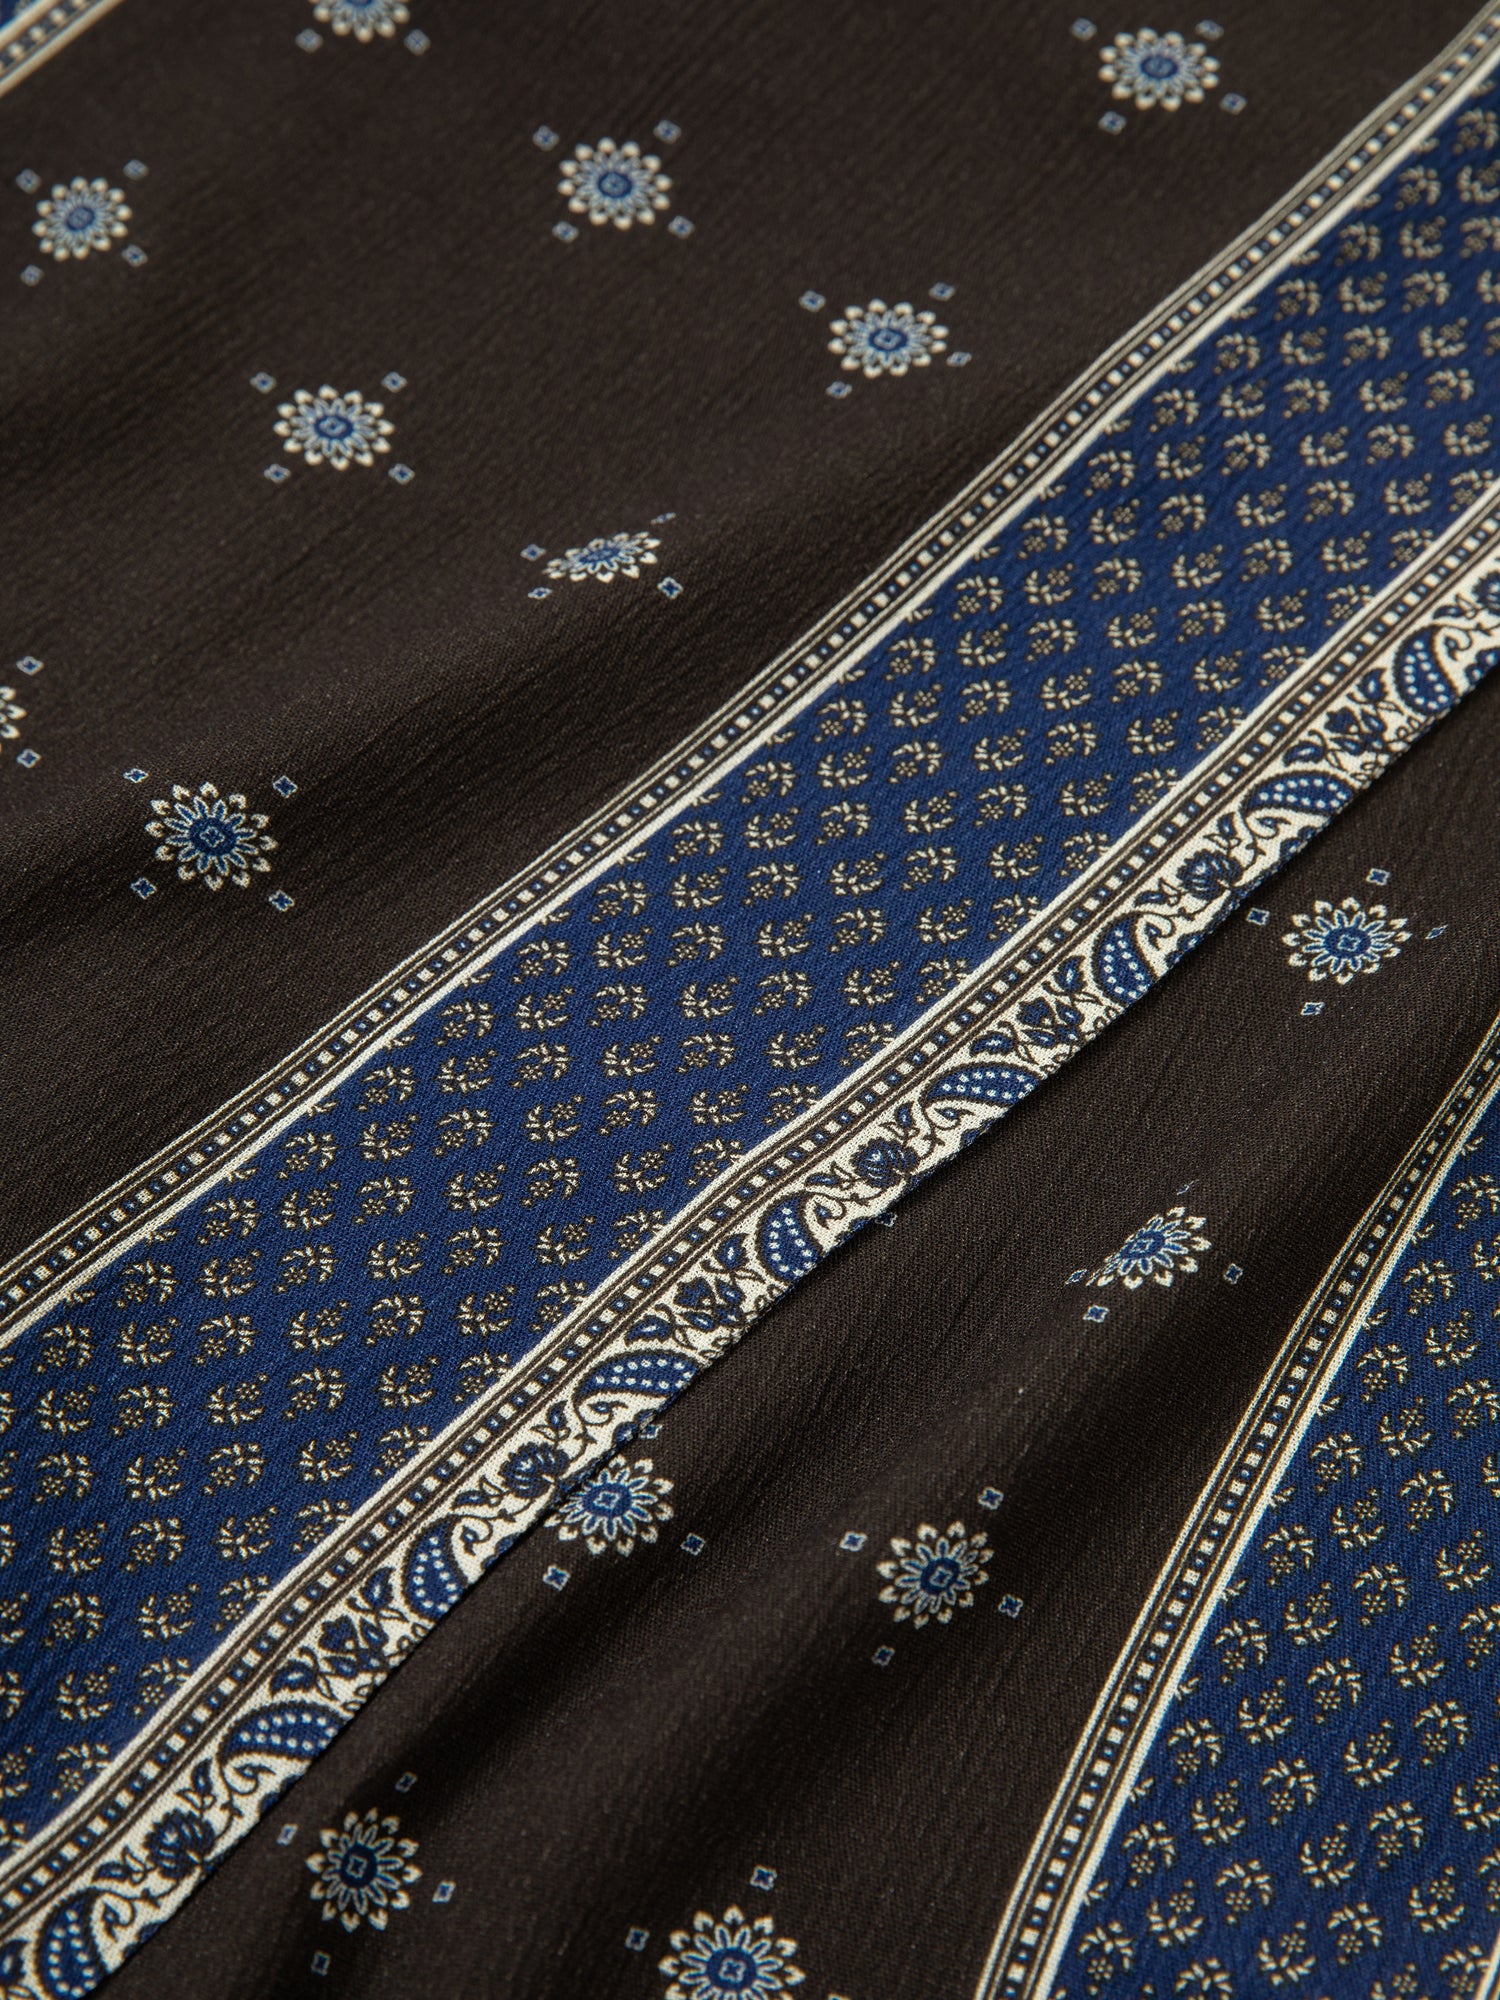 A close up of a Found Black Royal Blue Print Scarf fabric.